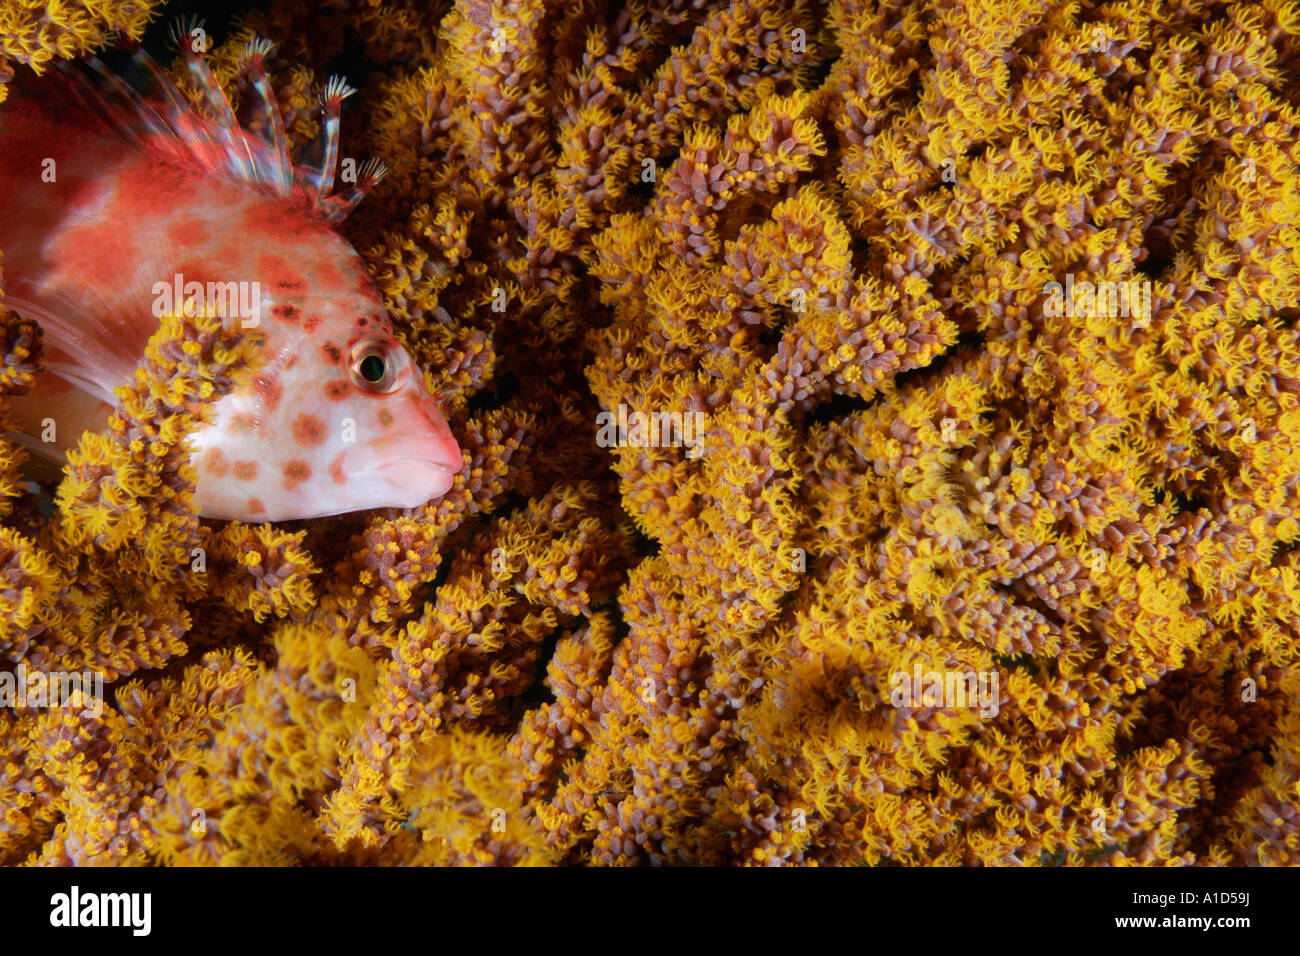 nu2487. Korallen Hawkfish, Cirrhitichthys Oxycephalus. Galapagos-Inseln, Ecuador. Pazifischen Ozean. Foto Copyright Brandon Cole Stockfoto